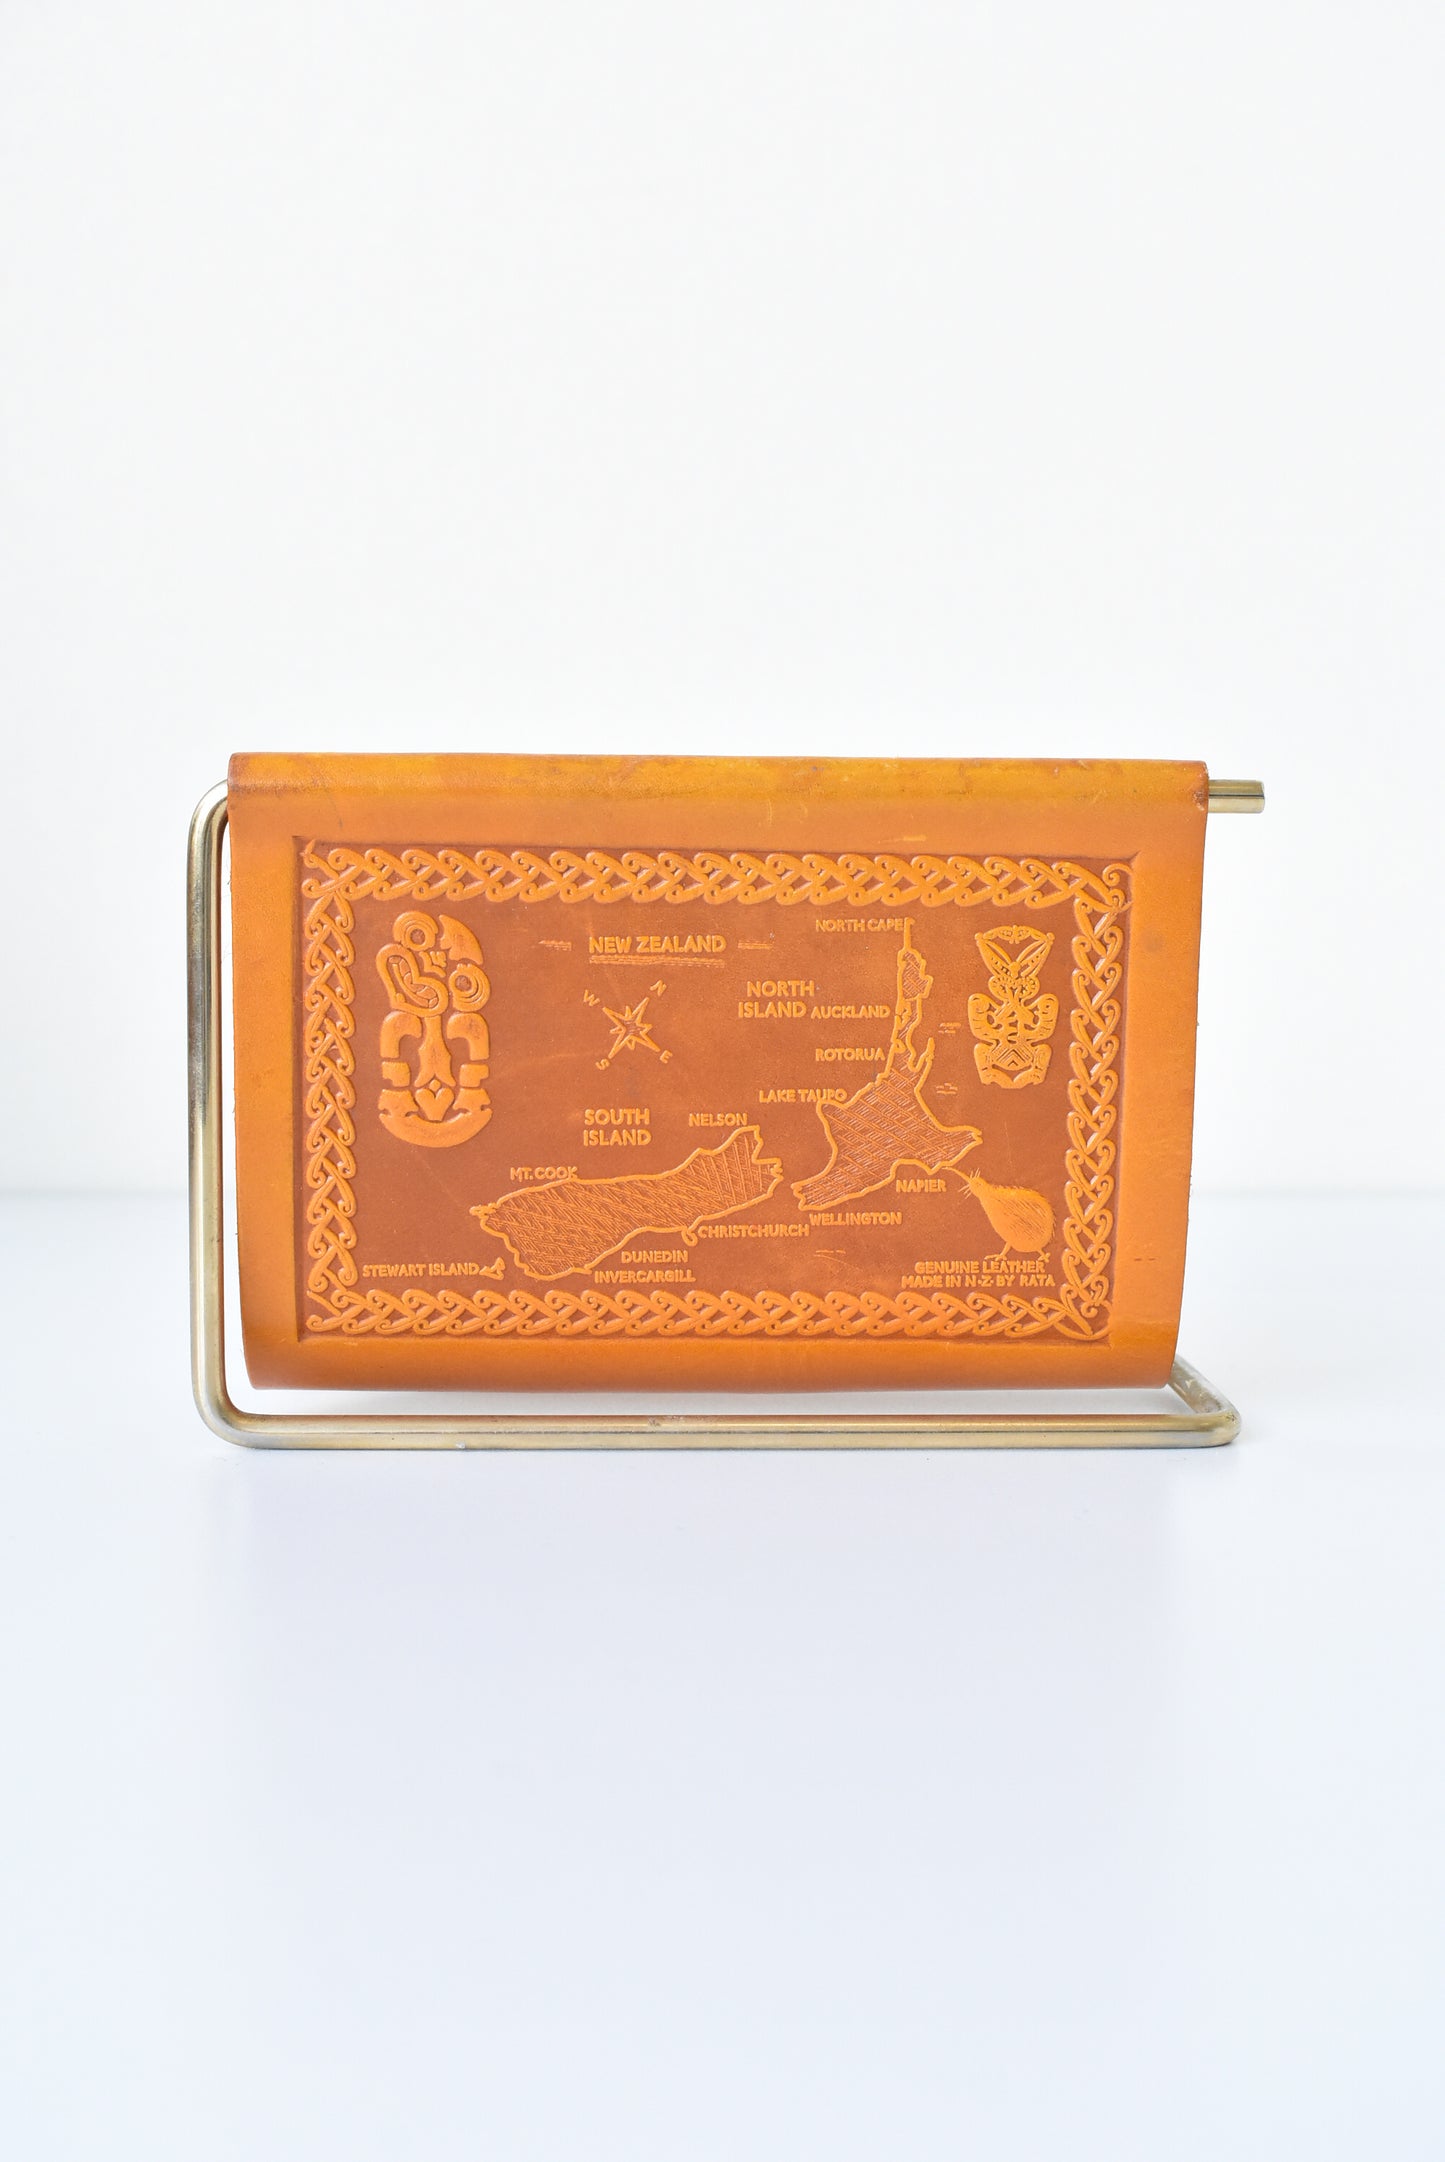 Vintage Kiwiana debossed leather letter holder